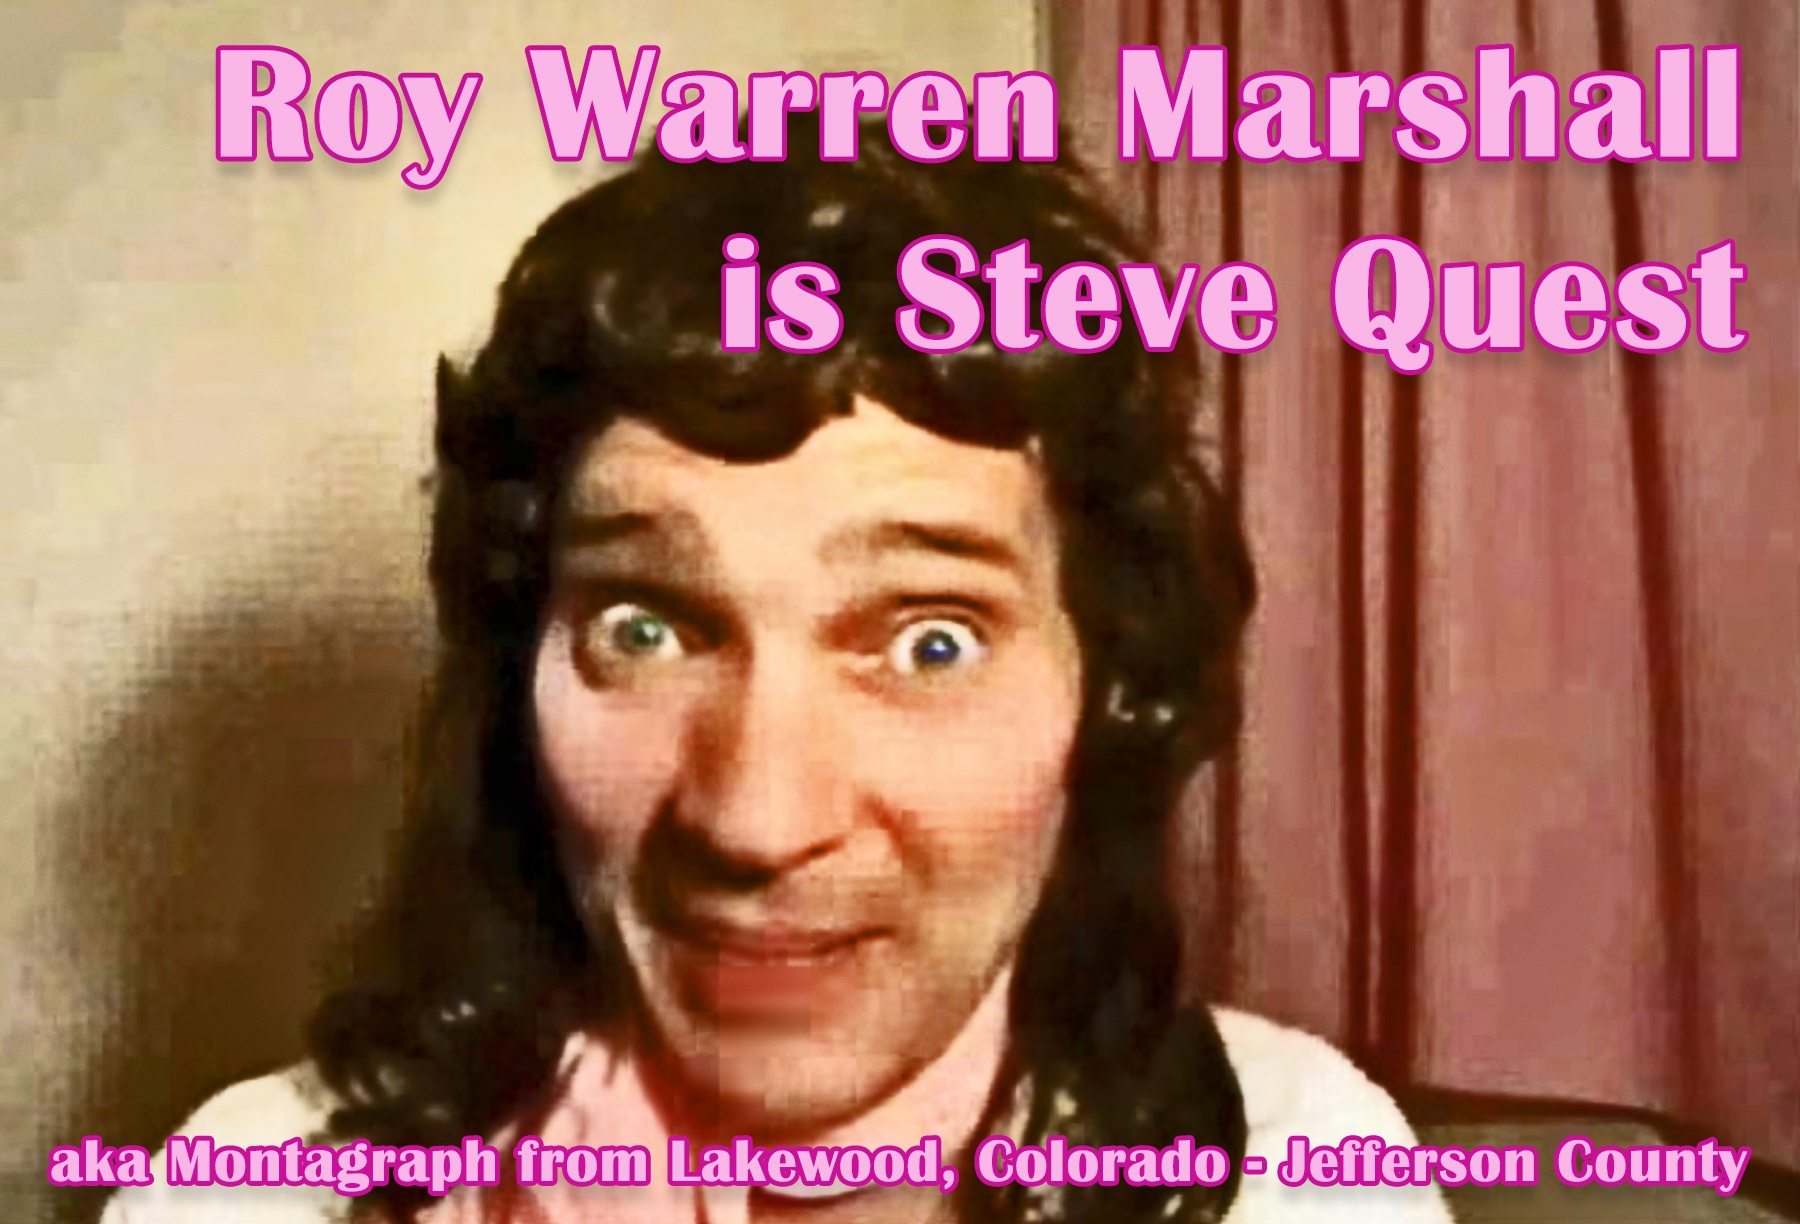 Steve Quest is Roy Warren Marshall aka Montagraph